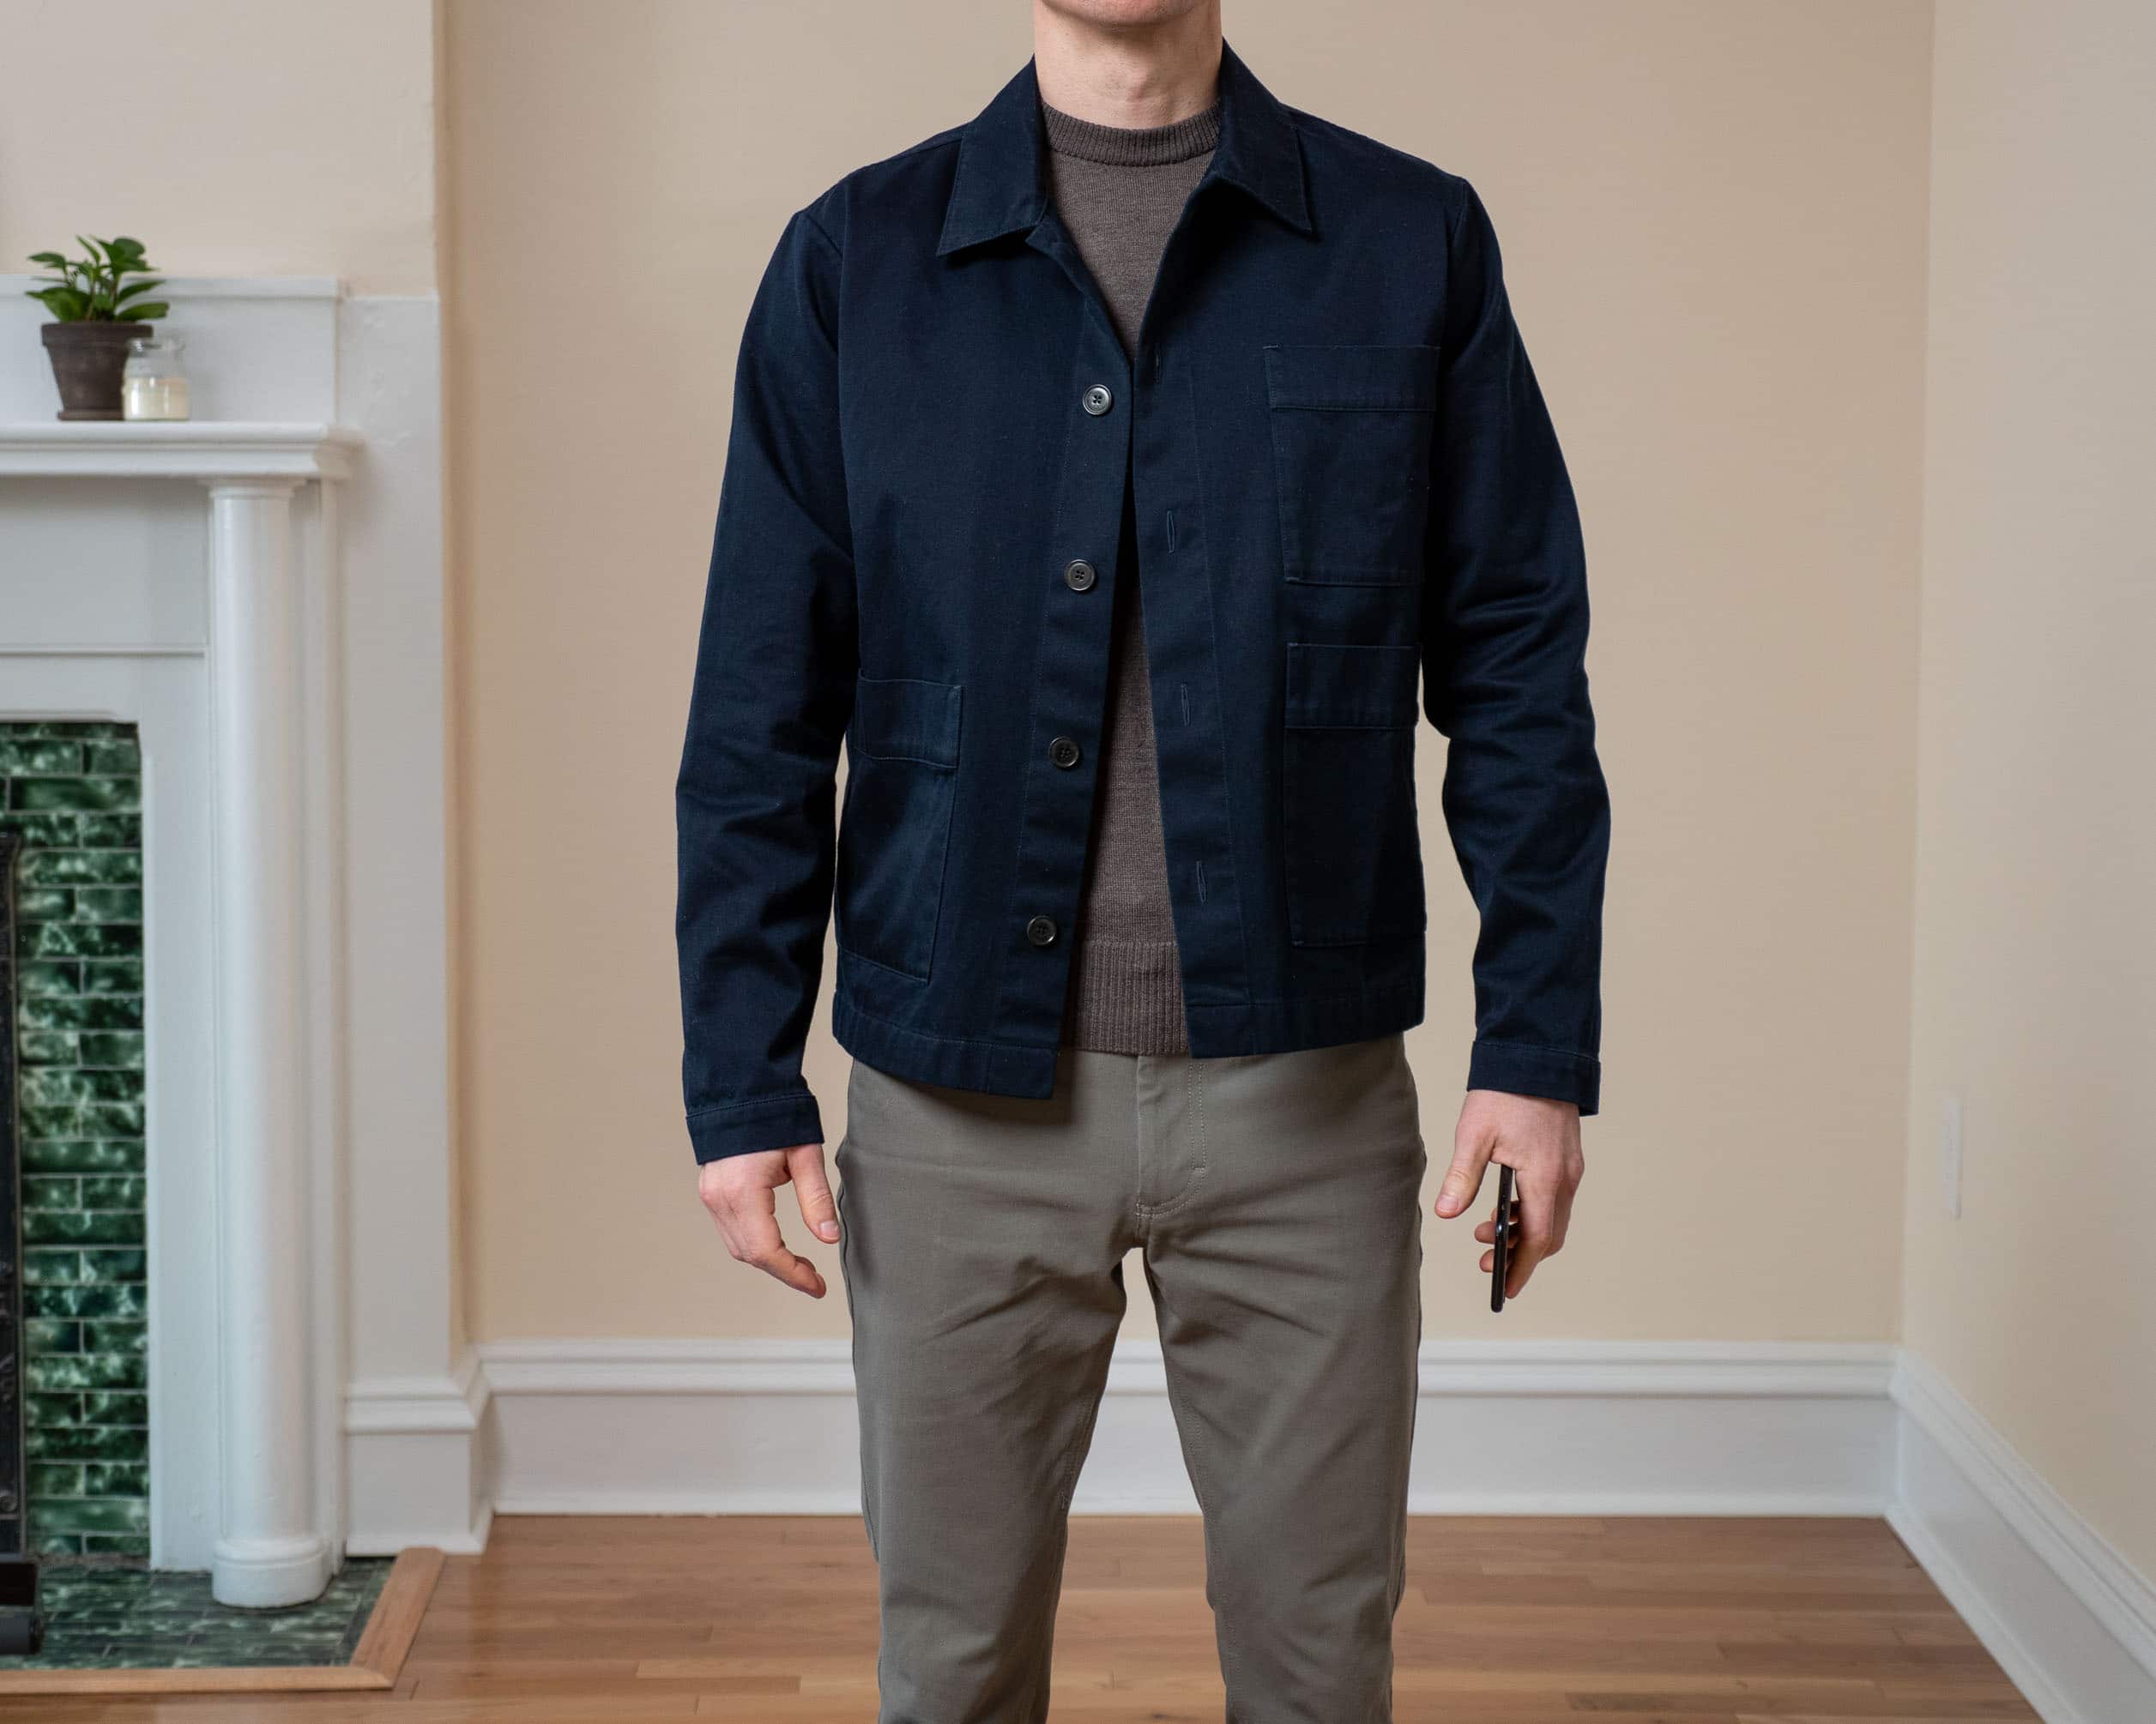 Clothes for Short Men – Under 5'10